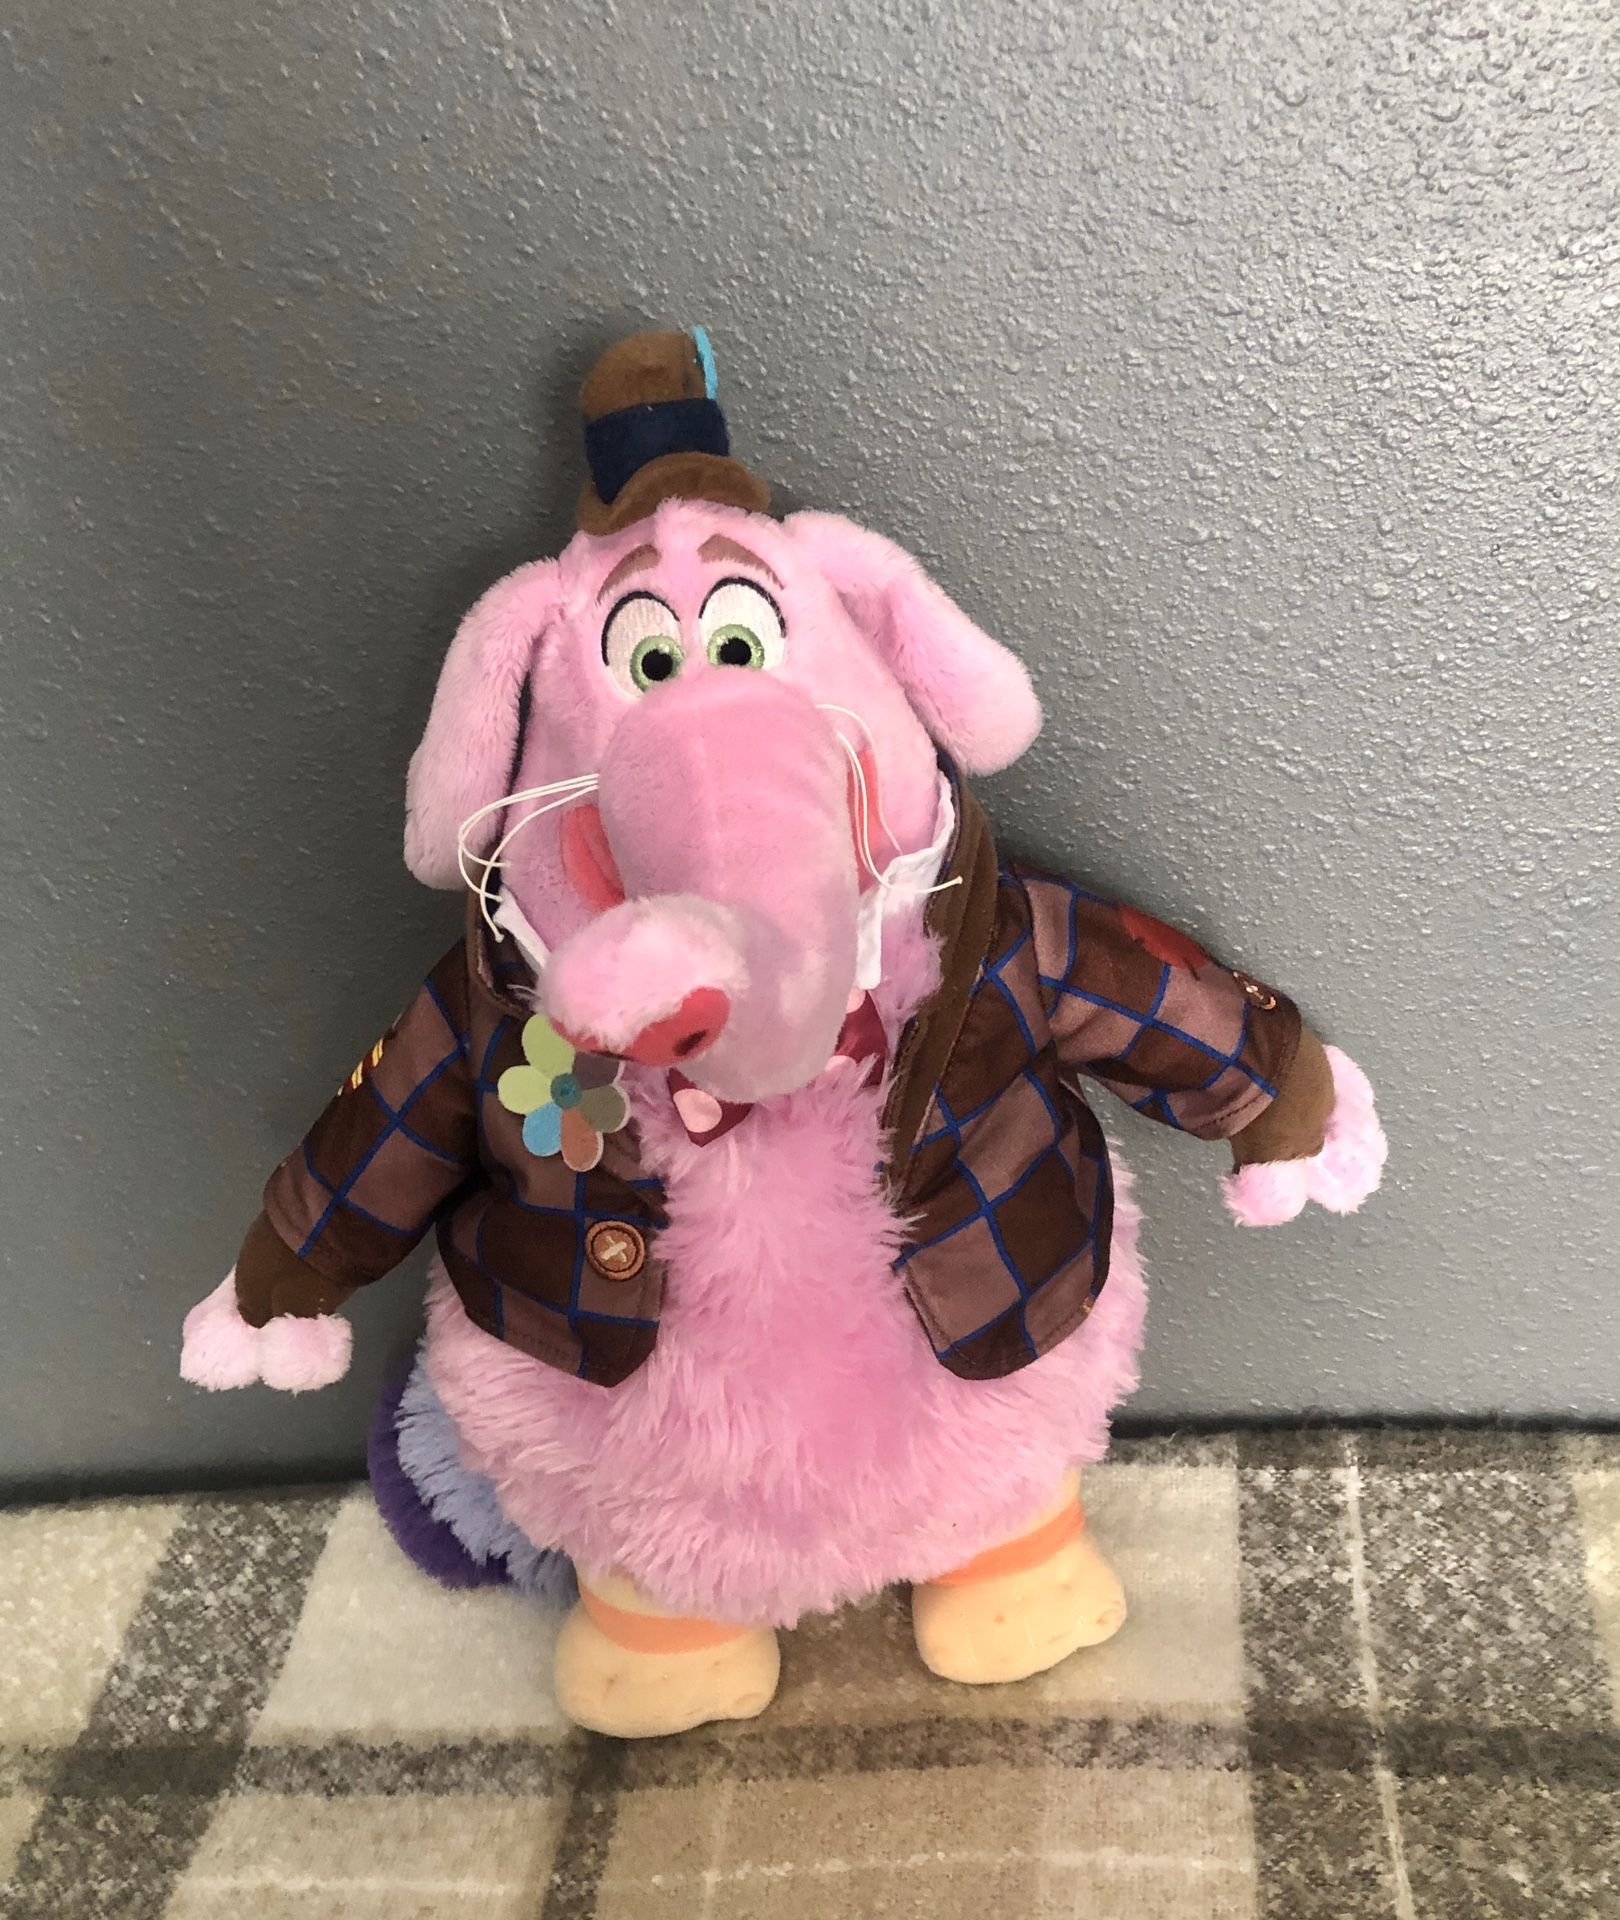 Disney store inside out pink elephant stuffed animal